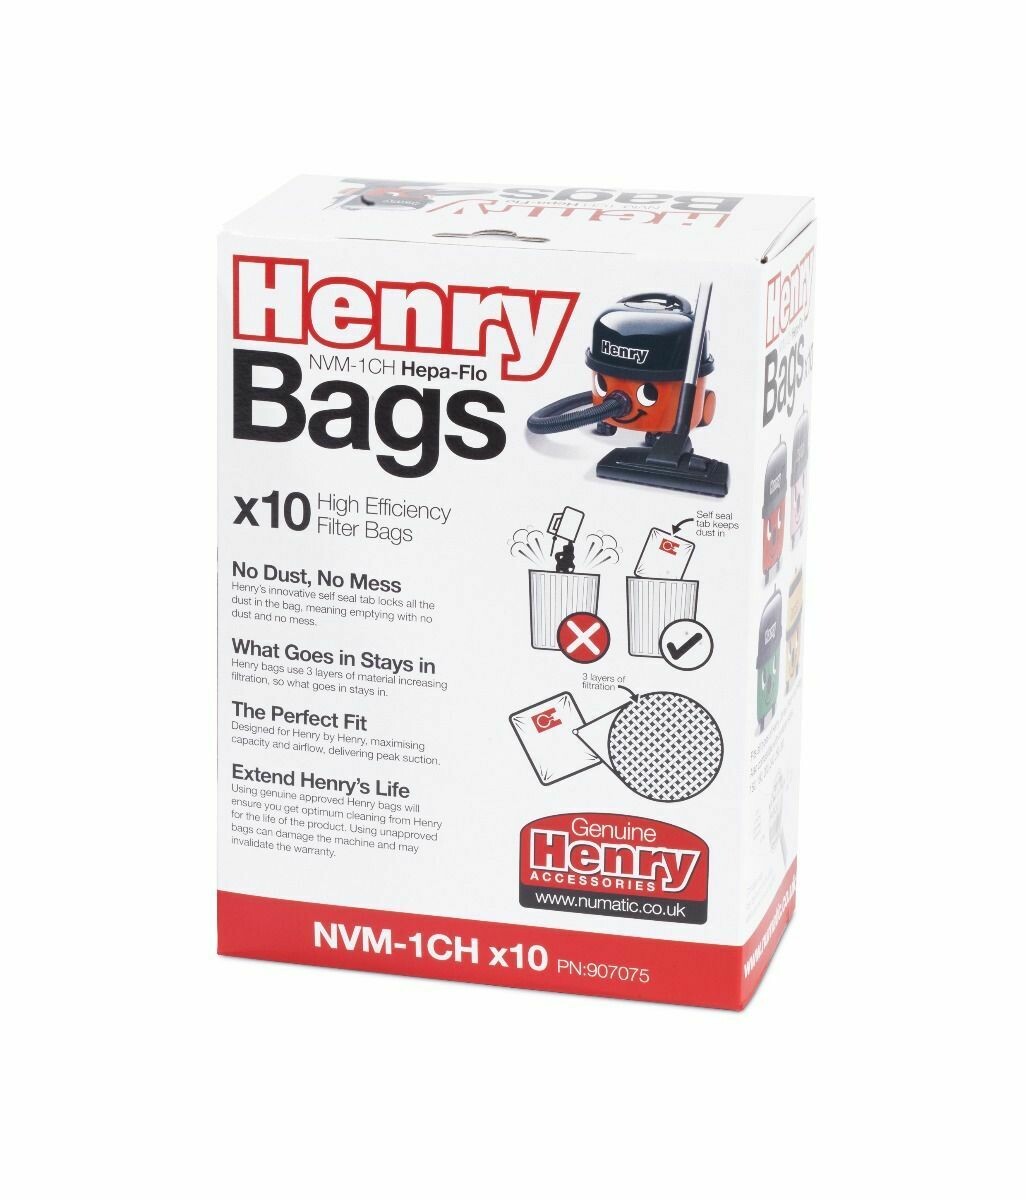 907166 Henry HEPA-FLO Disposable Bags Bulk Pack of 80 bags